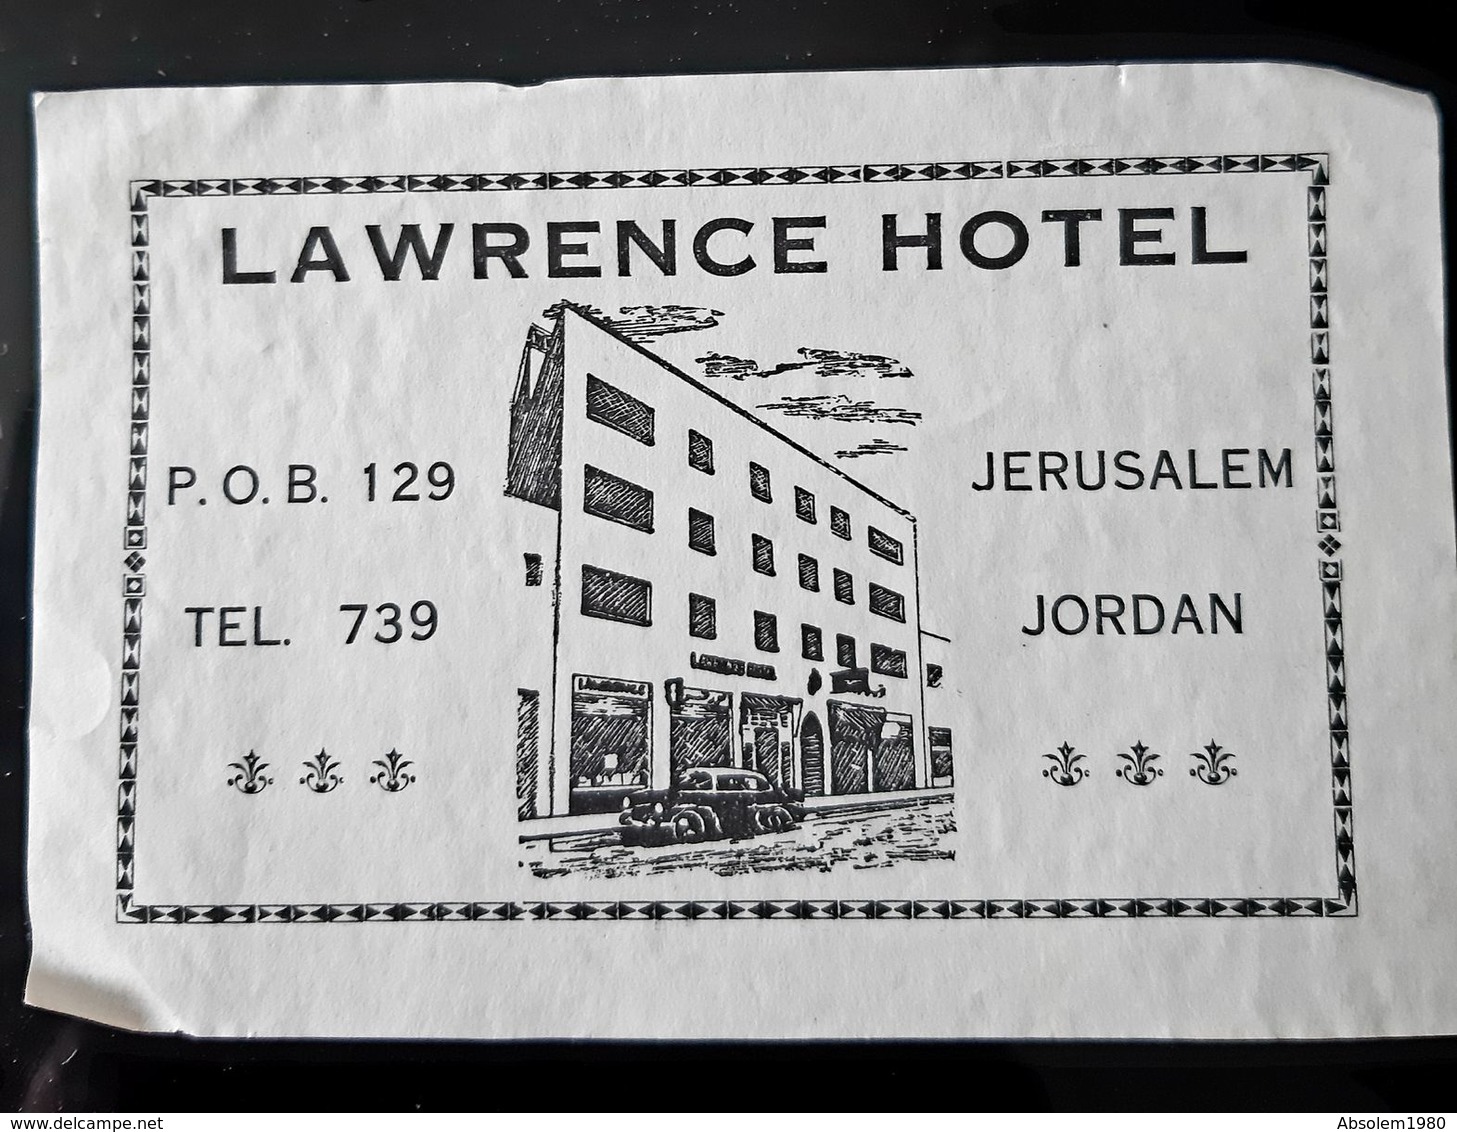 HOTEL LAWRENCE JERUSALEM JORDAN JORDANIE ETIQUETTE LUGGAGE LABEL ETICHETTA ETIQUETA - Hotel Labels